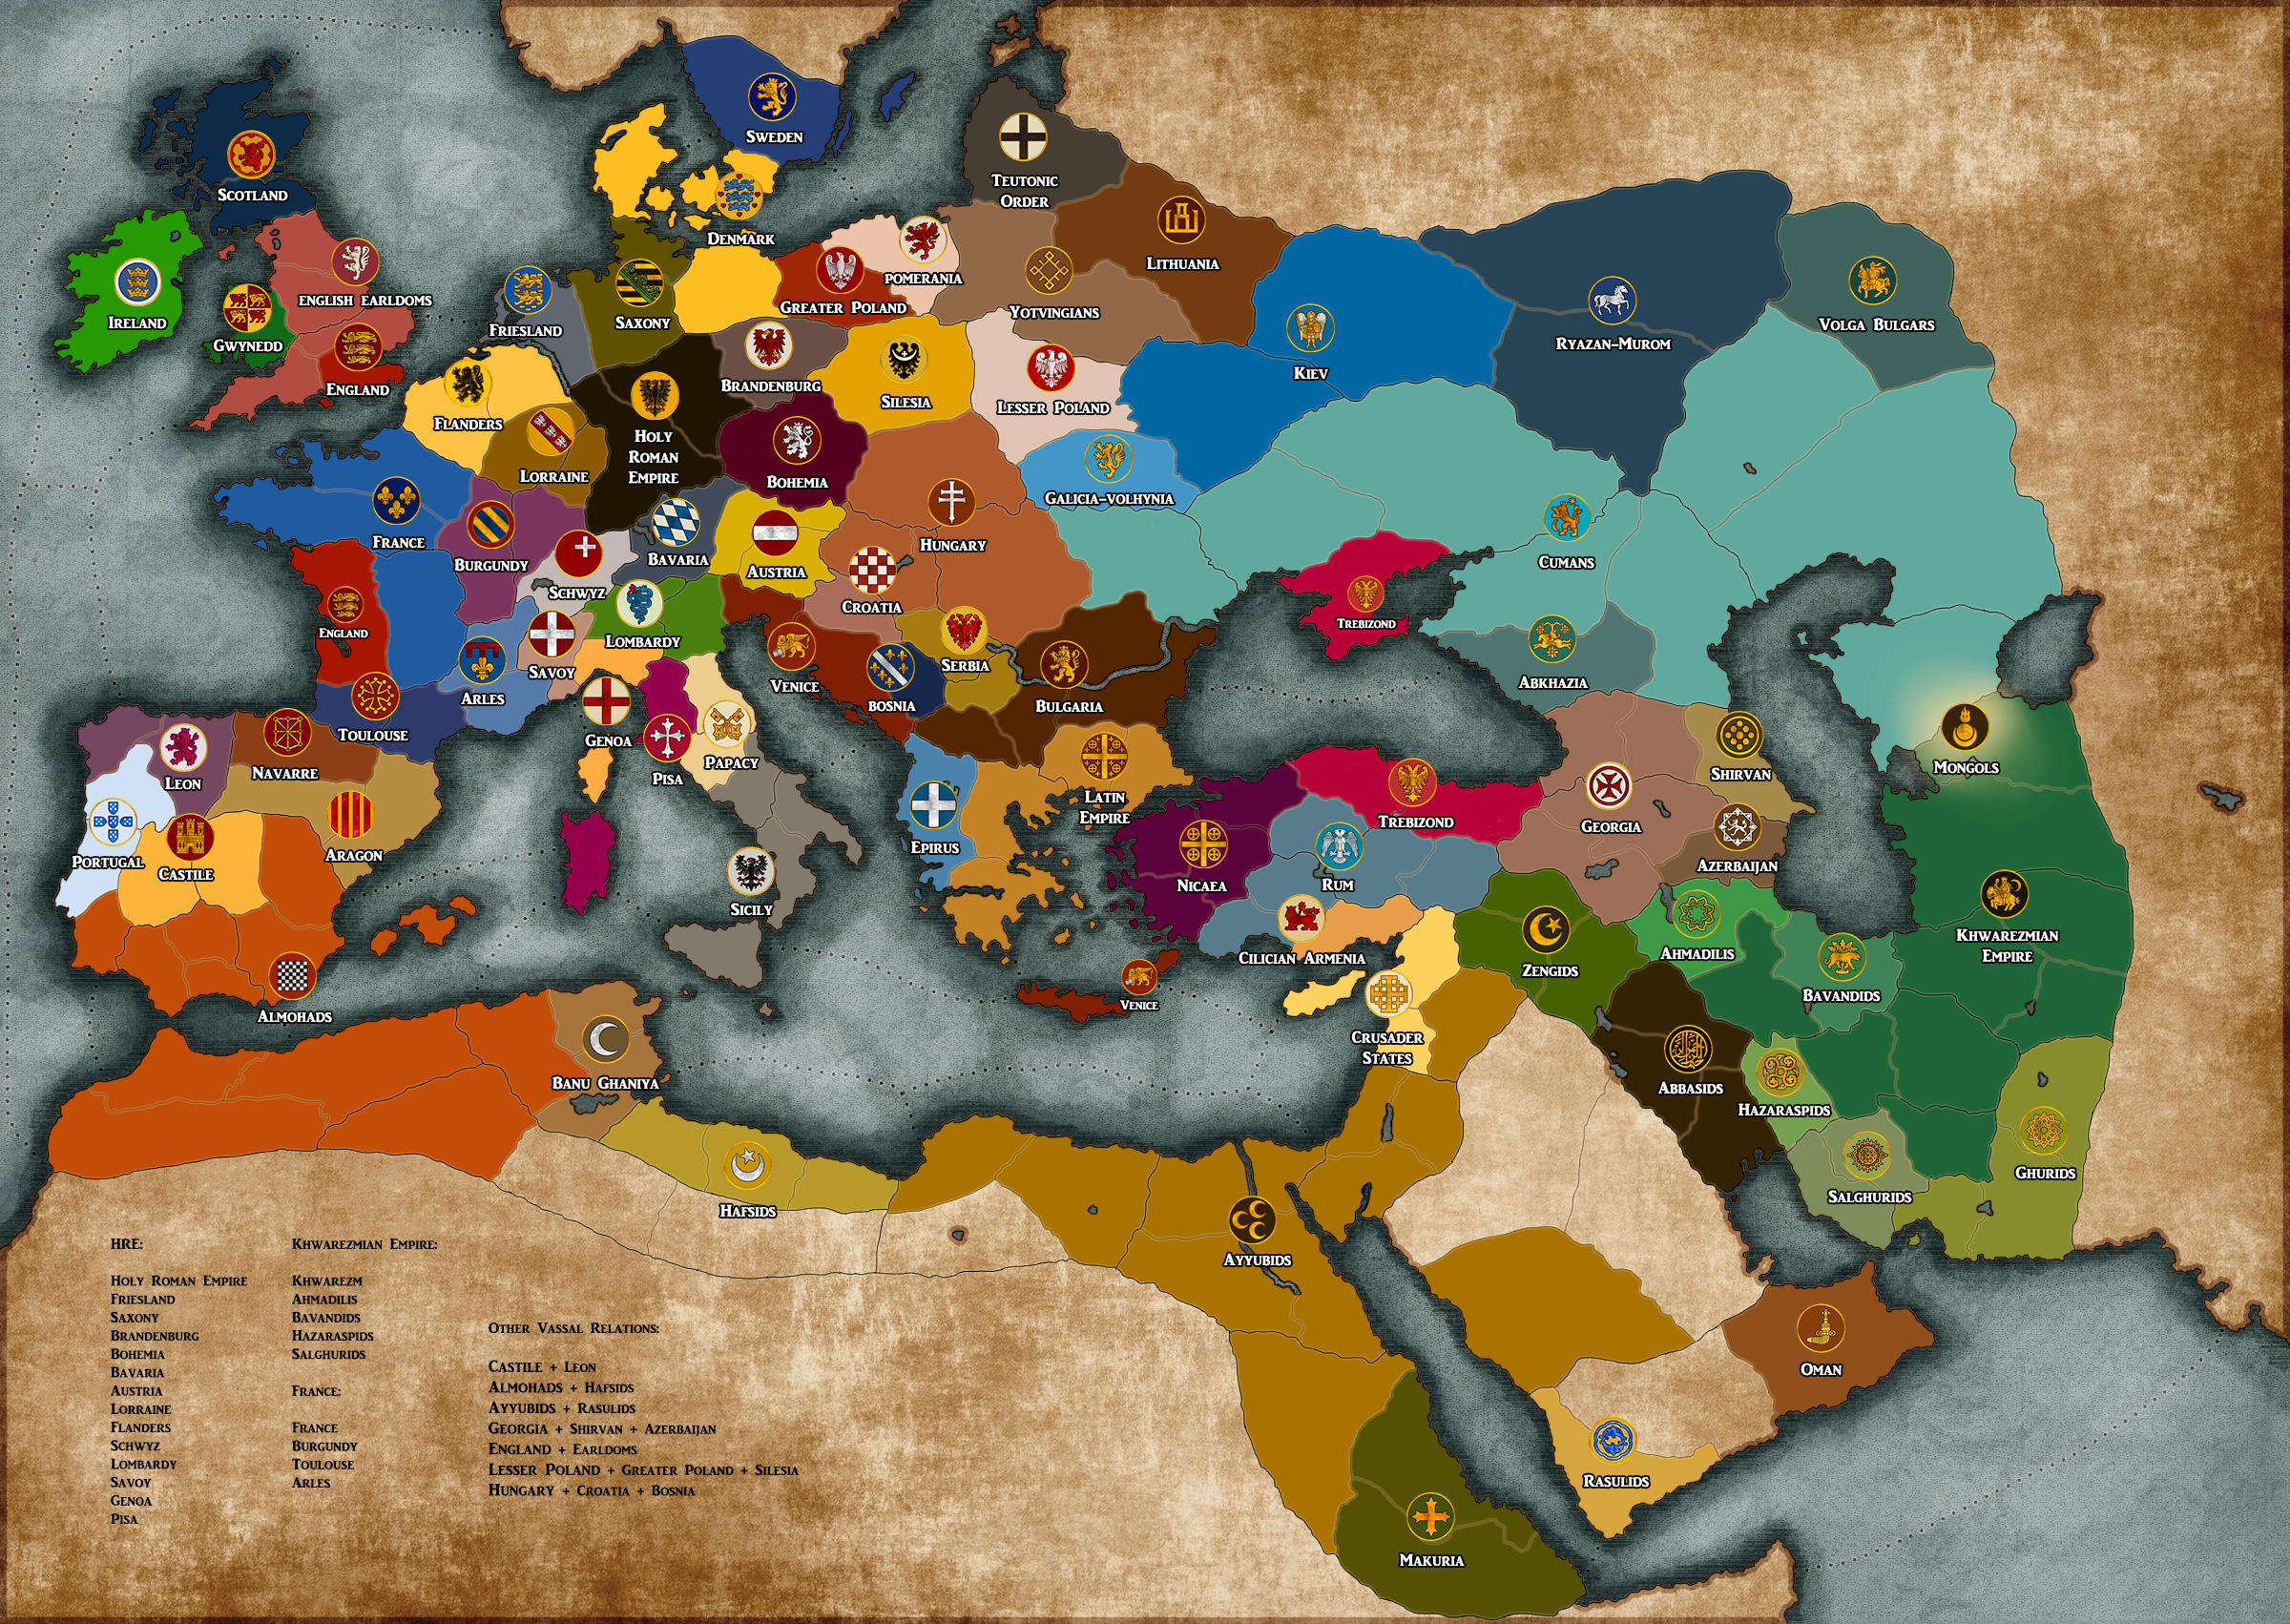 medieval kingdoms 1212 discord